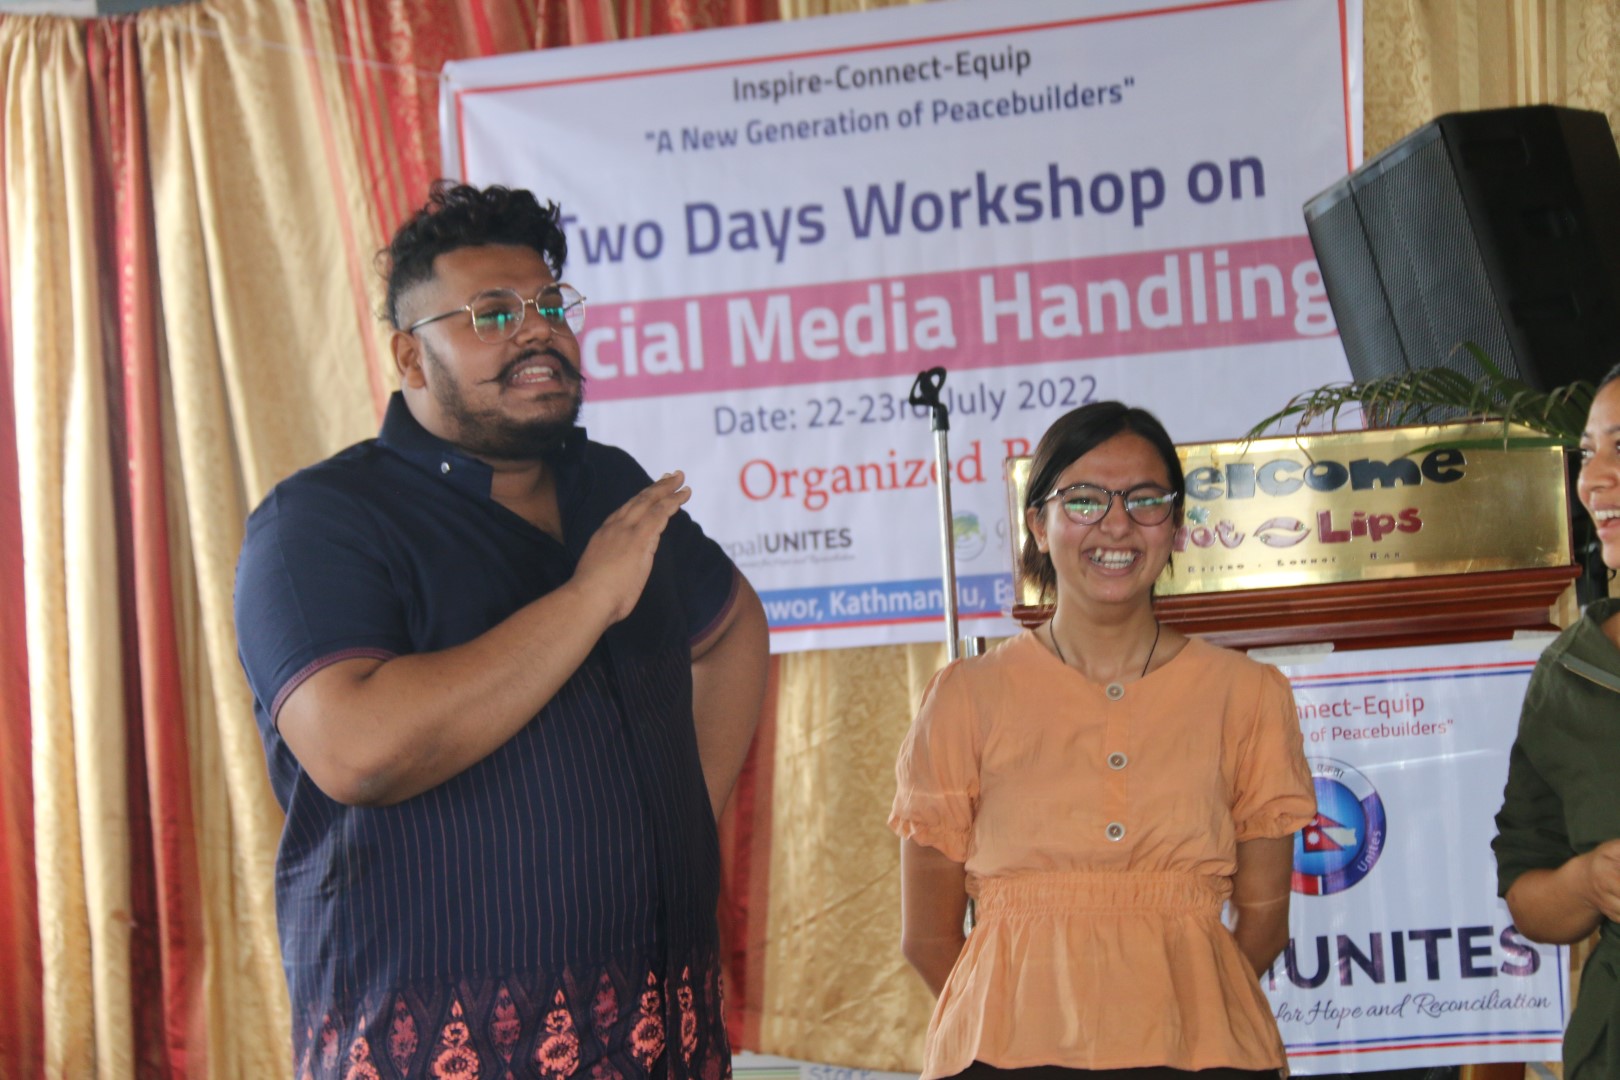 Social Media Handling Workshop on Peacebuilding